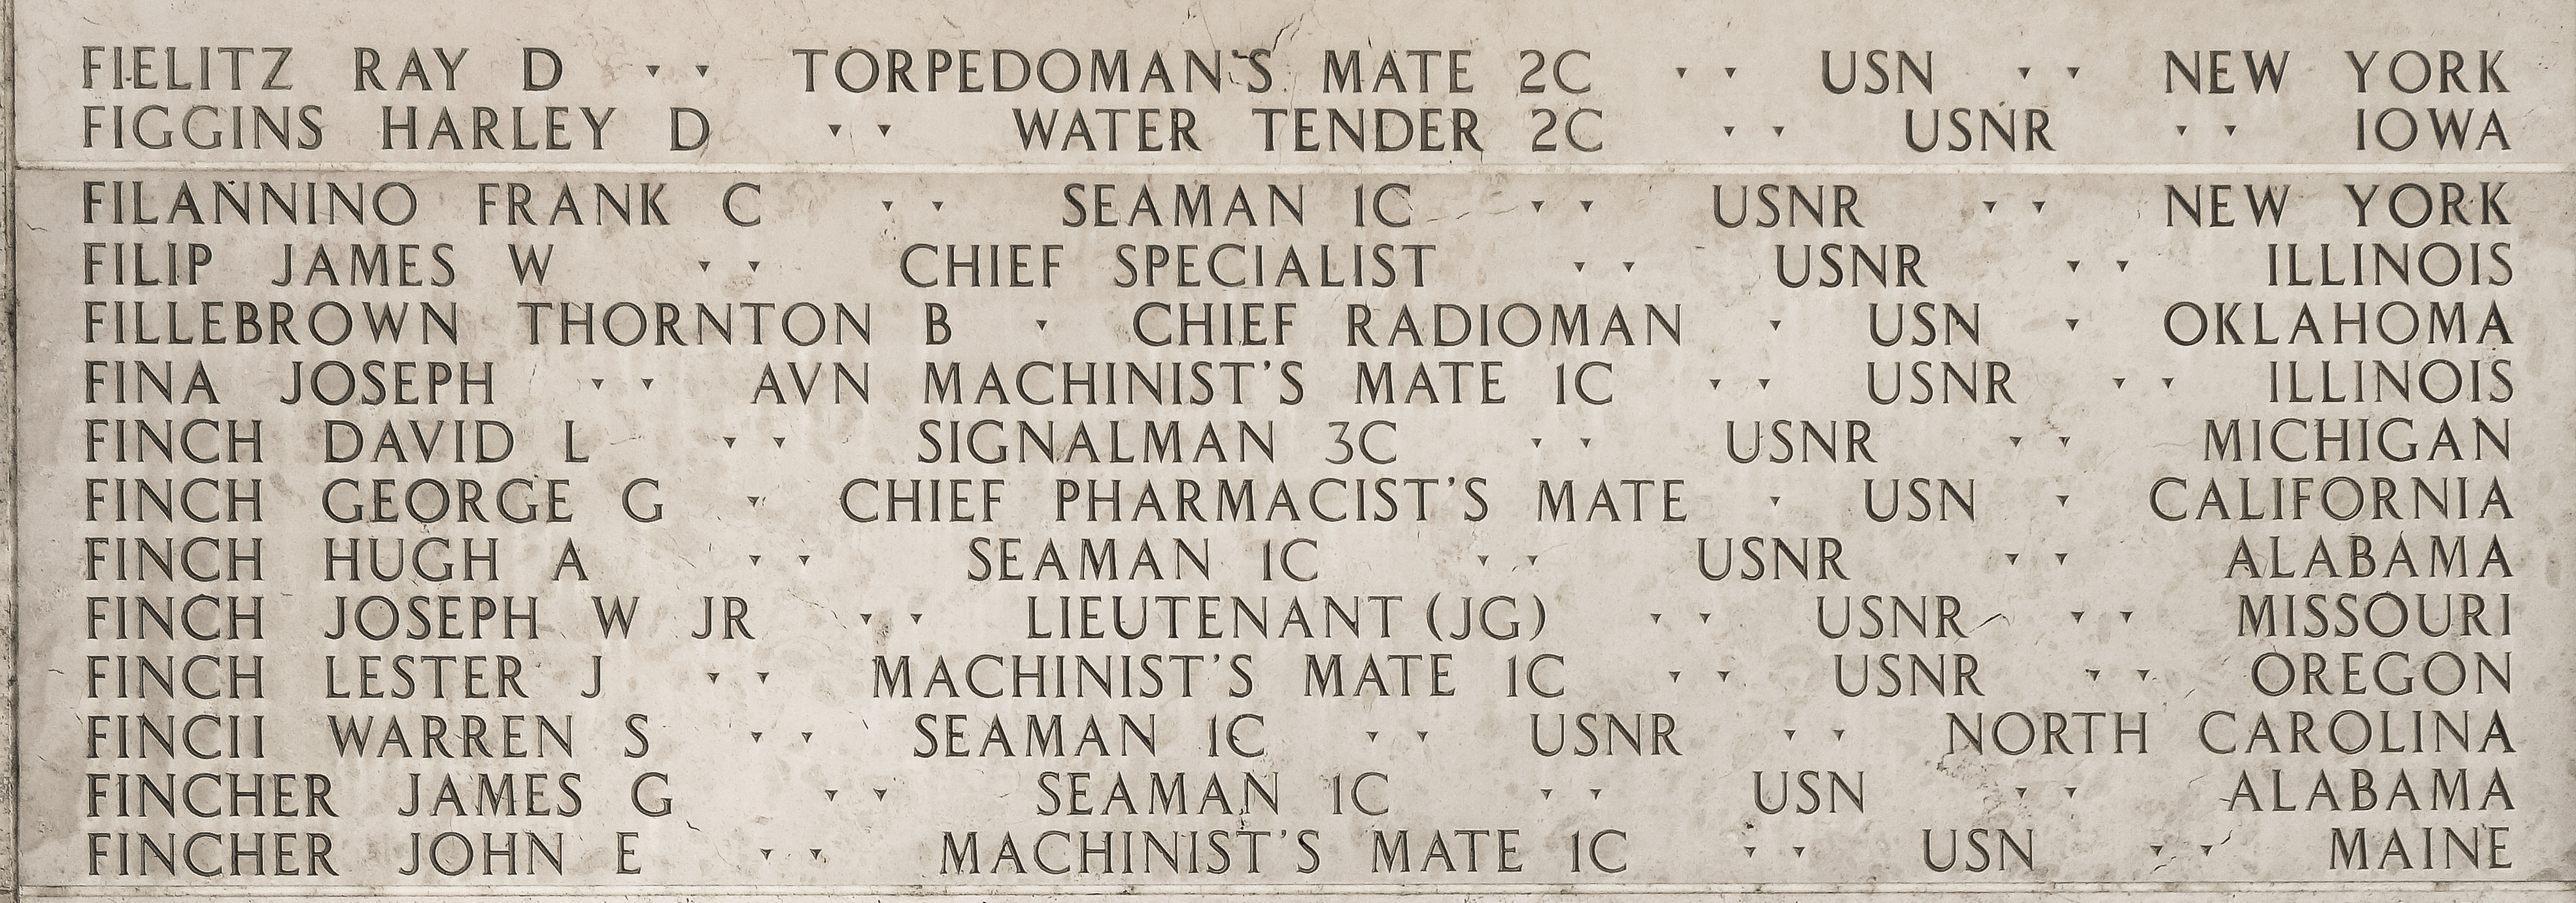 Ray D. Fielitz, Torpedoman's Mate Second Class